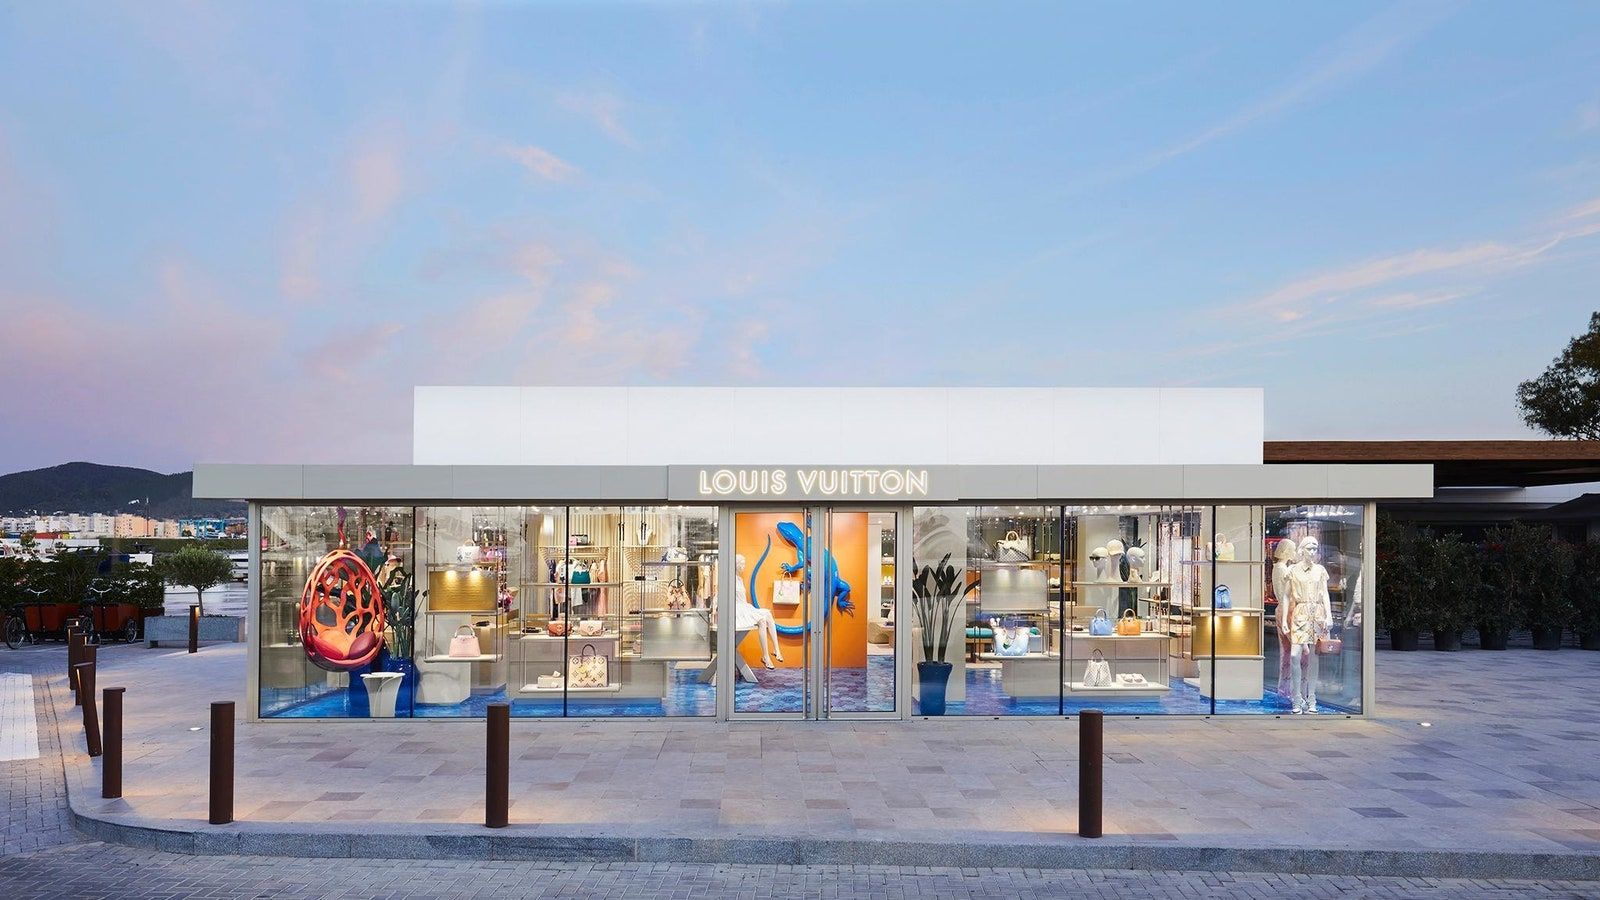 Louis Vuitton s new space